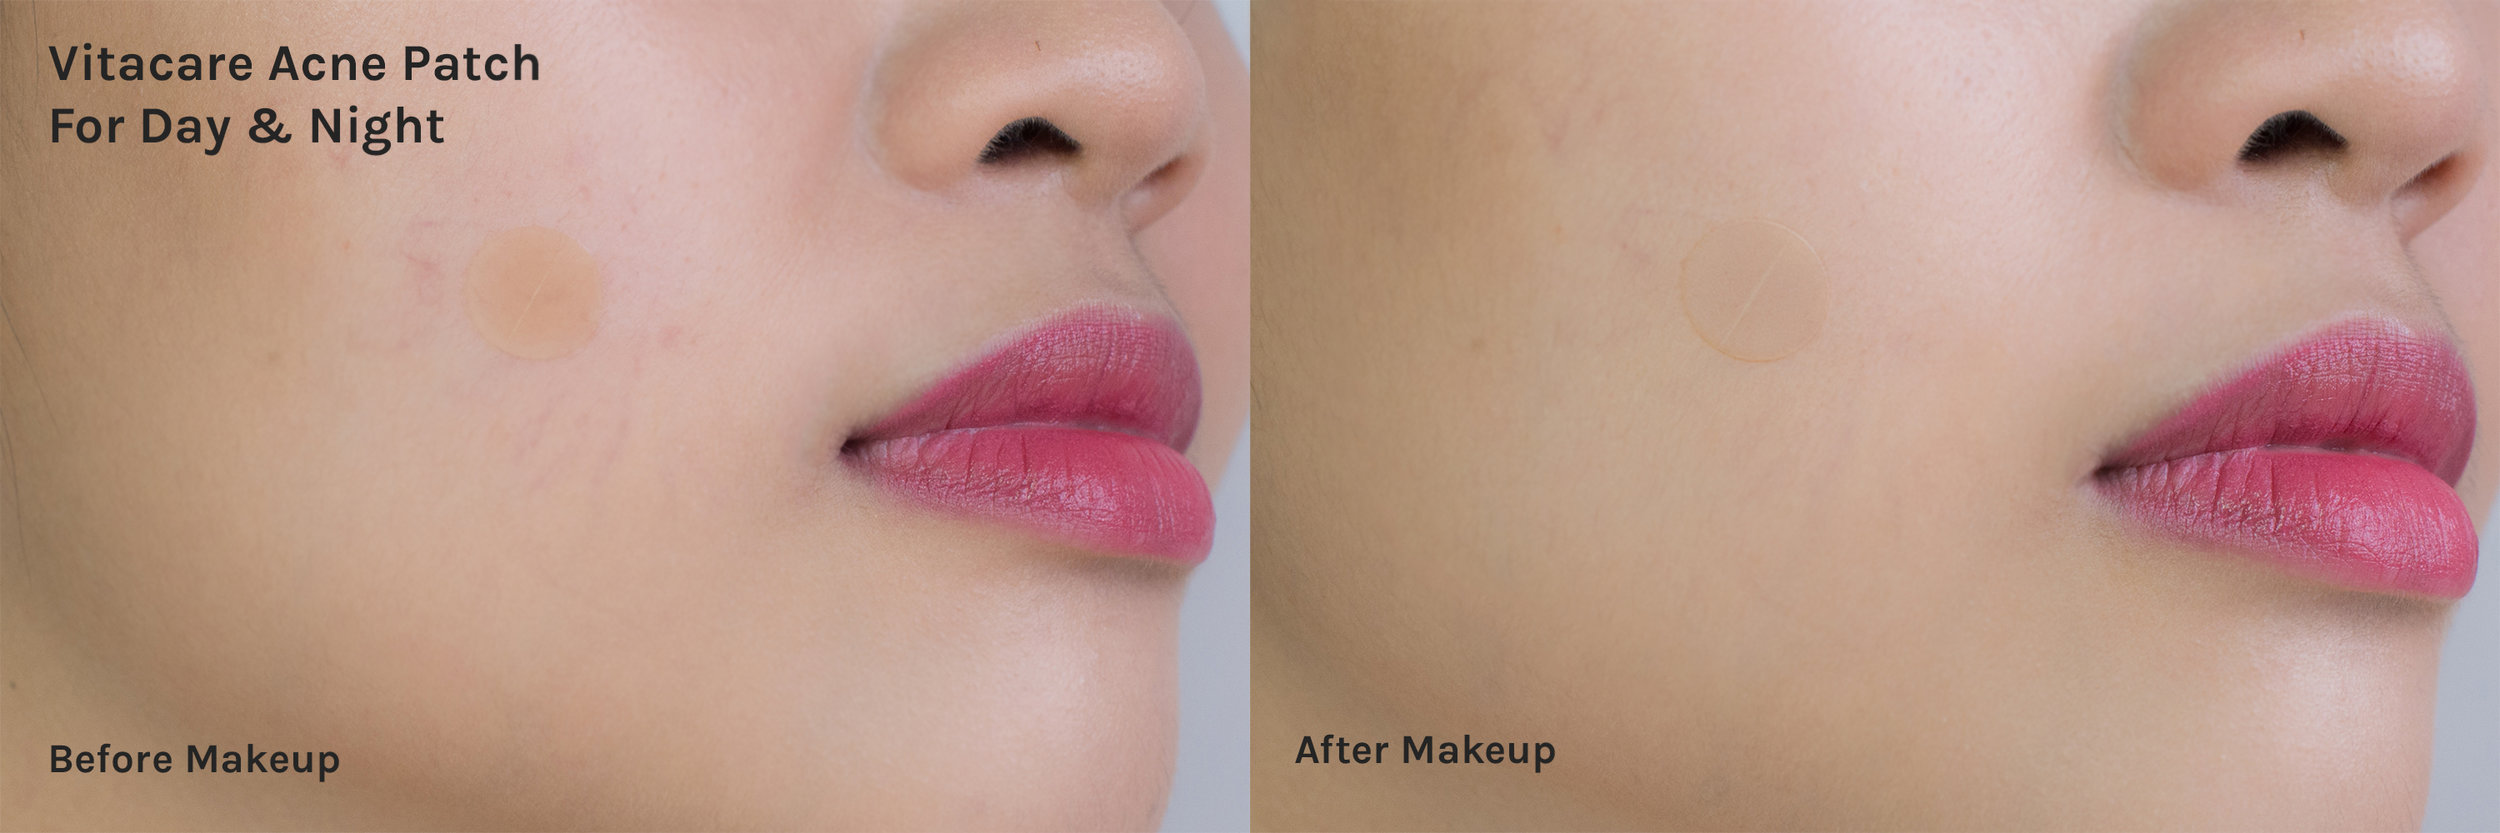 pimple patches under makeup Pimple patches inflammatory acne acnee
plasture beautyshop ventussa